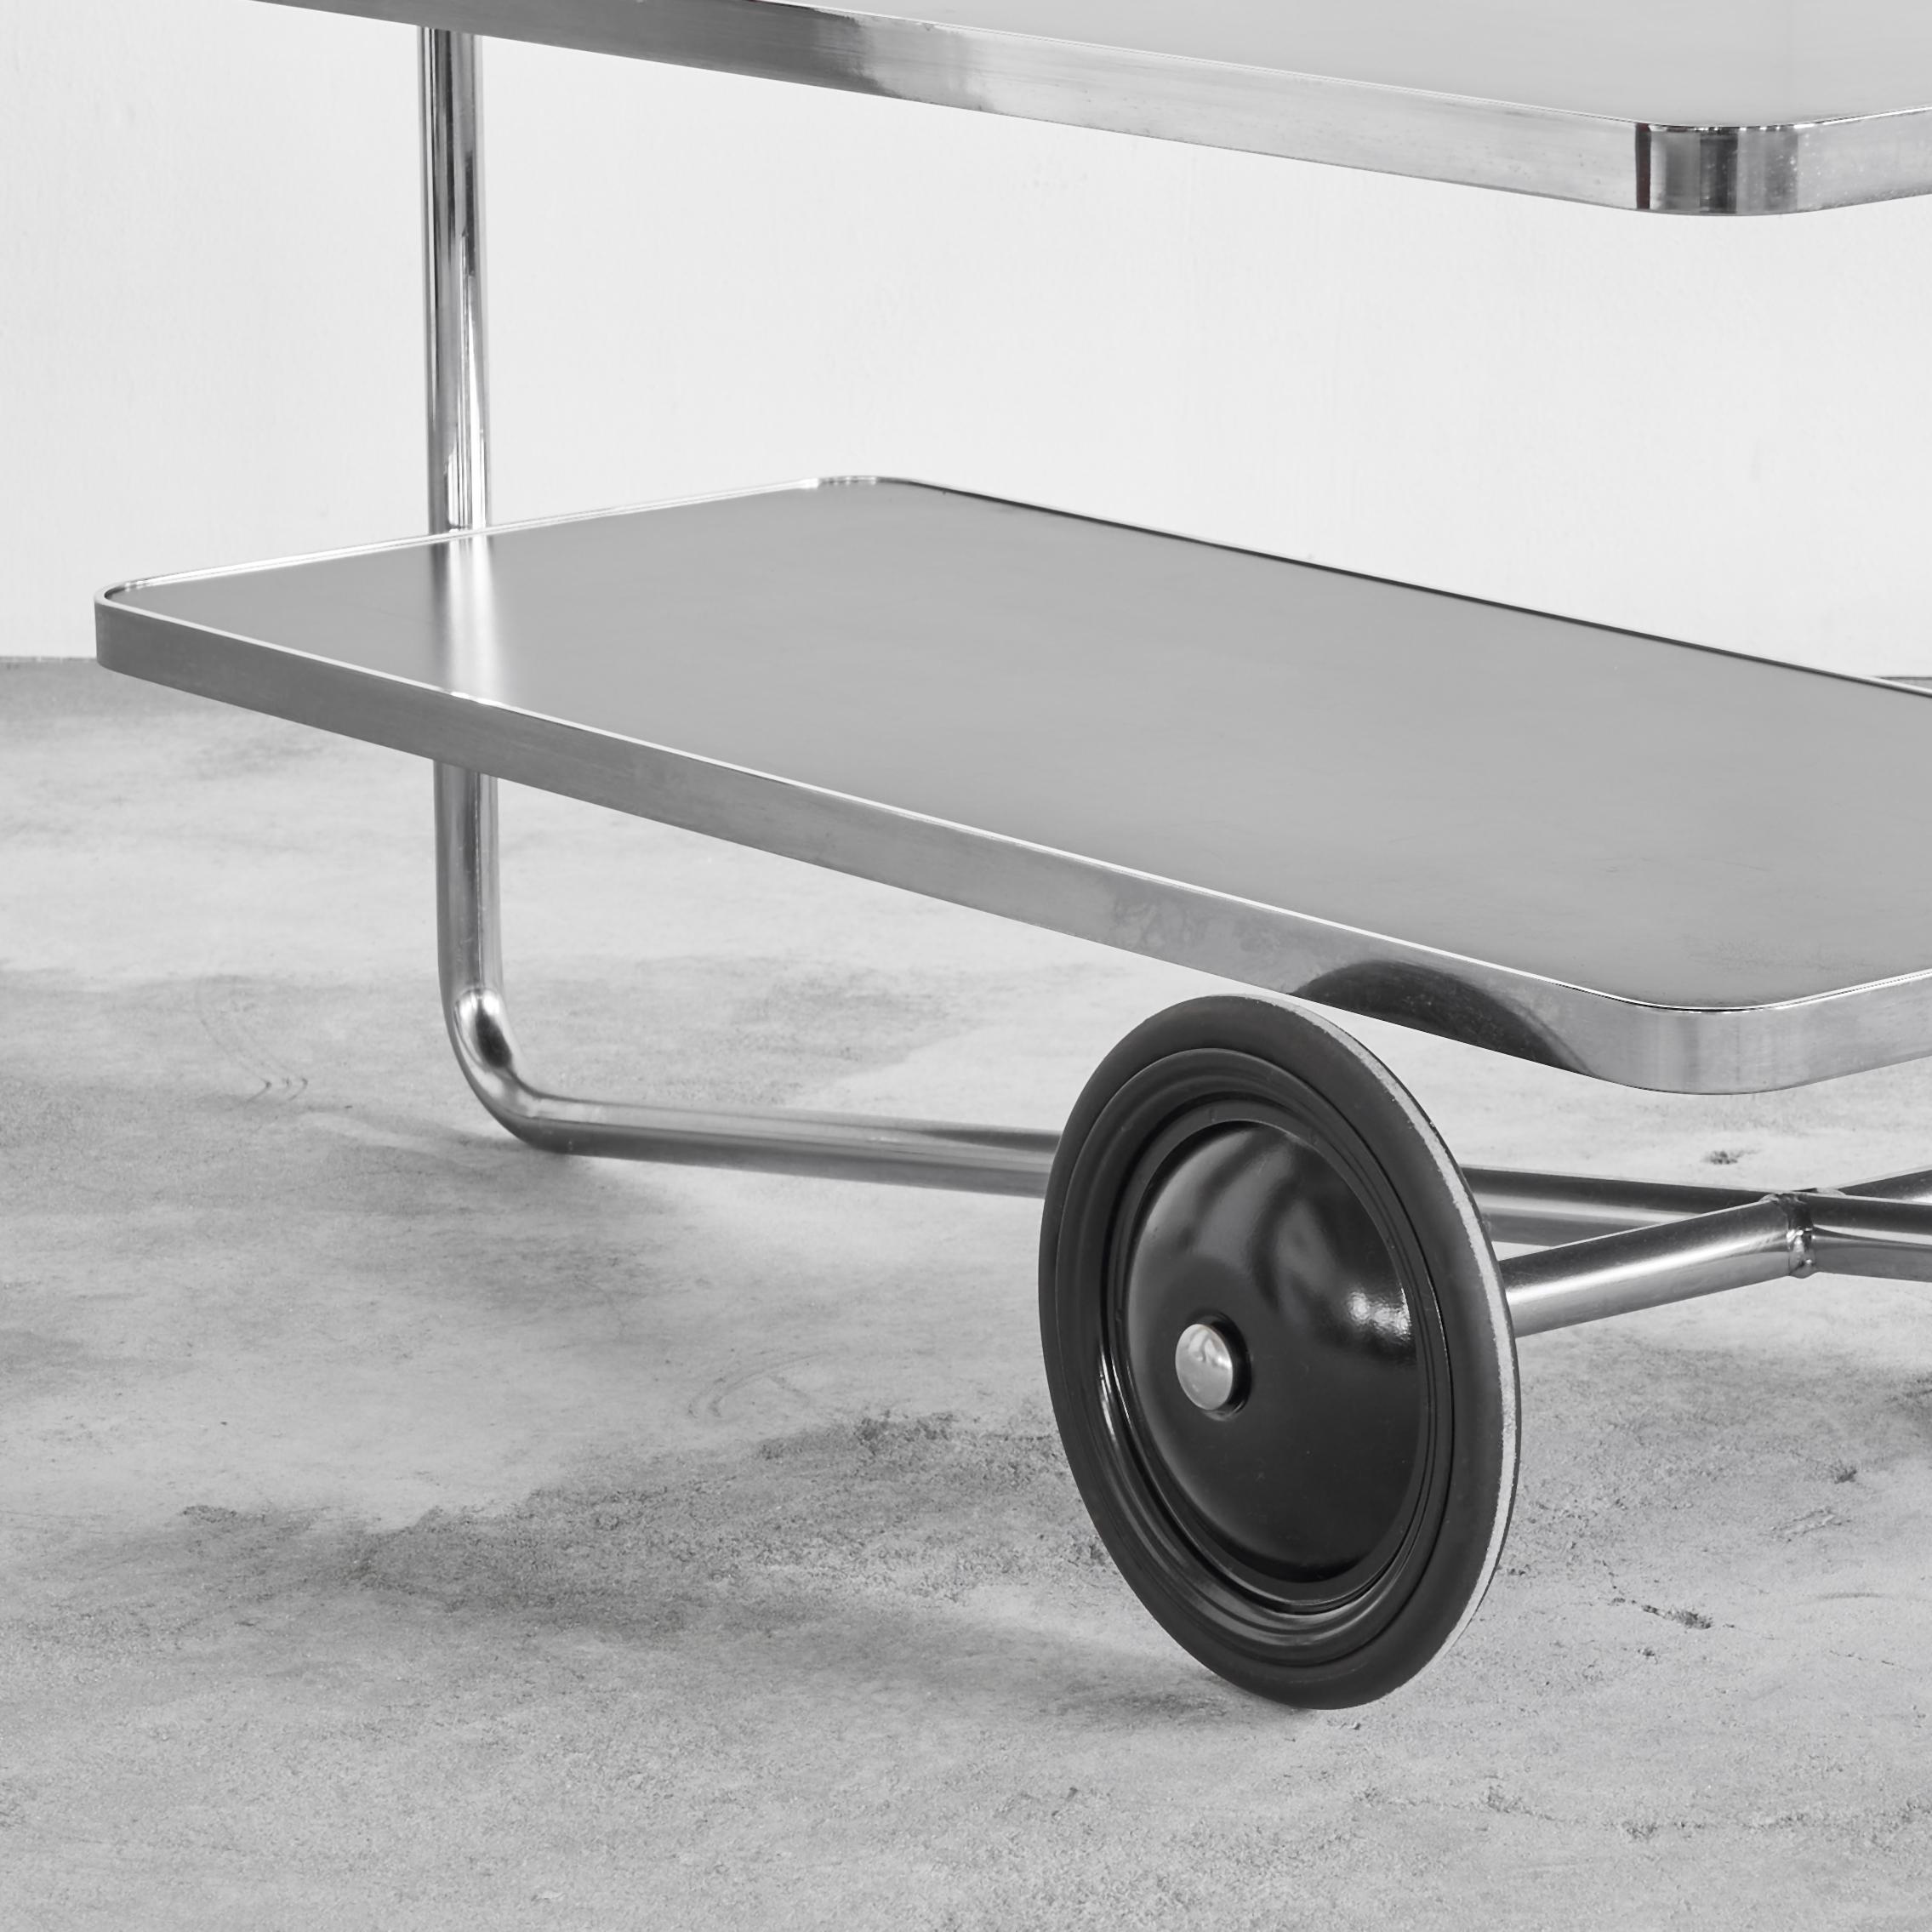 Thonet Bauhaus Style Tubular Trolley or Bar Cart 1980s For Sale 1